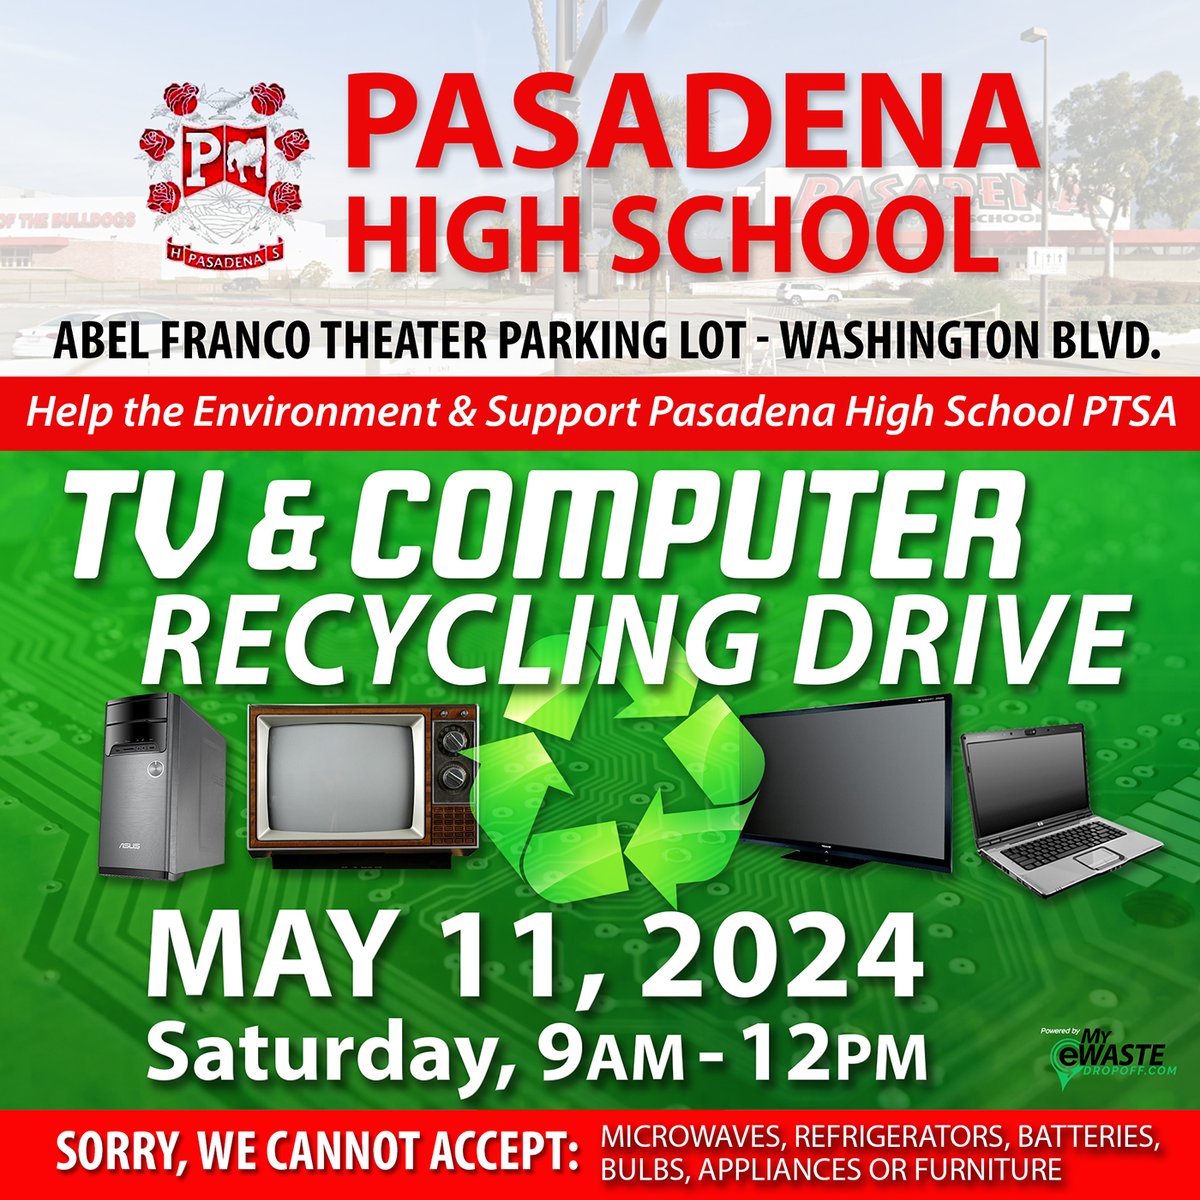 Save the date: TV and computer recycling event. Saturday. May 11, 2024 9:00 am - 12:00 pm at Pasadena High School. #GOBulldogs #pasadenahighschool